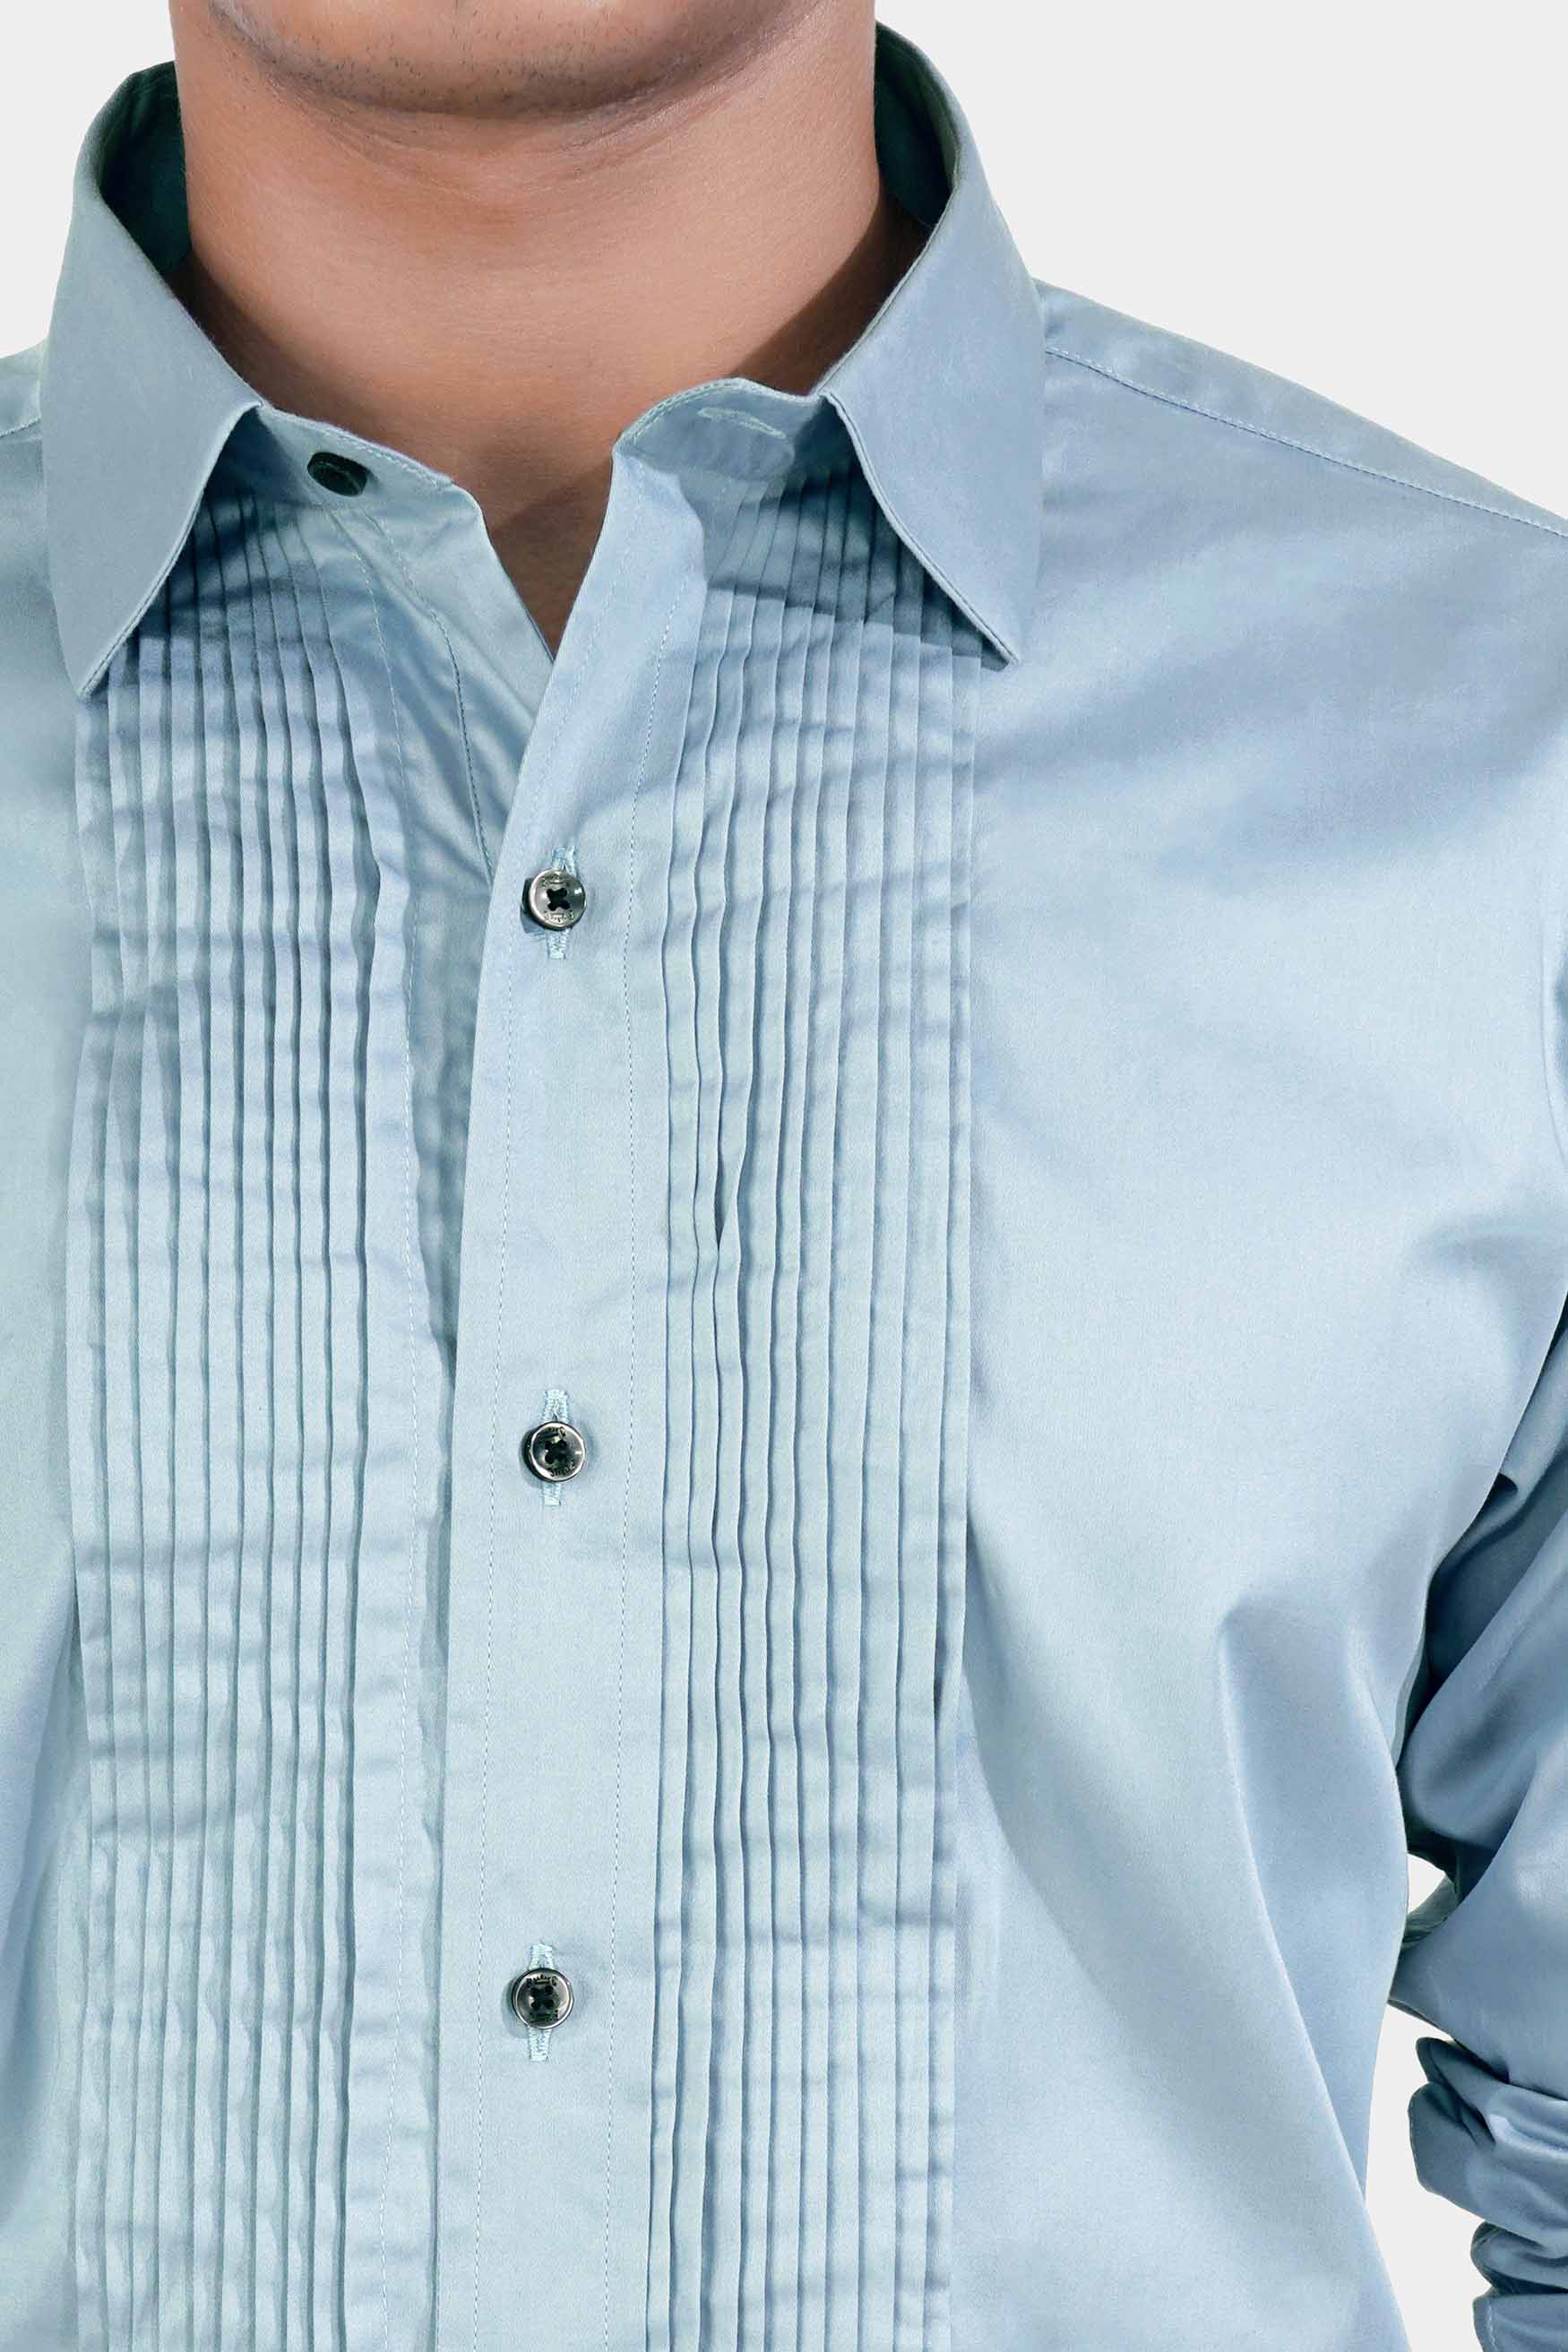 Casper Blue Subtle Sheen Super Soft Premium Cotton Tuxedo Shirt